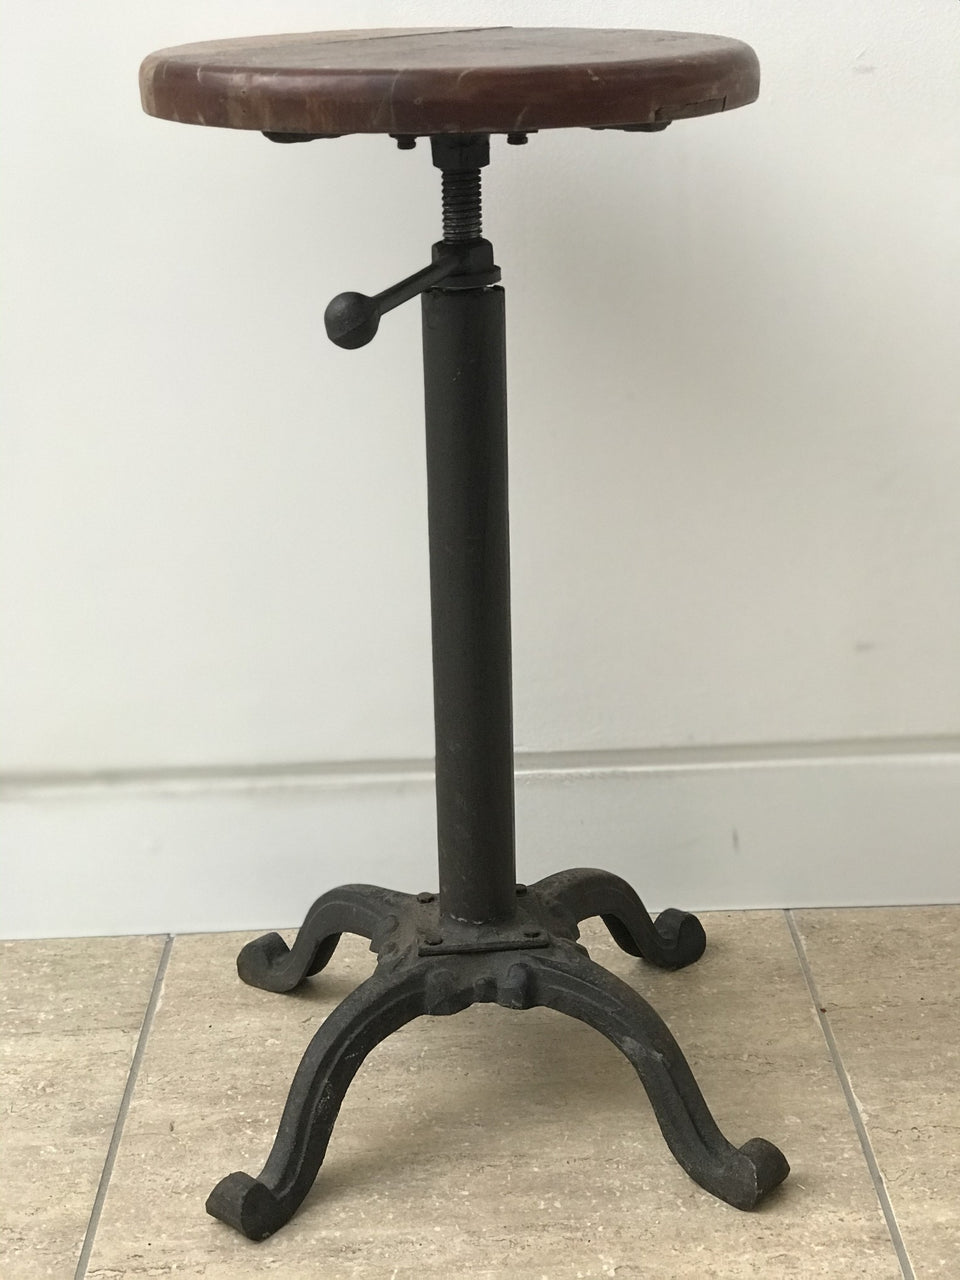 Vintage Industrial stool